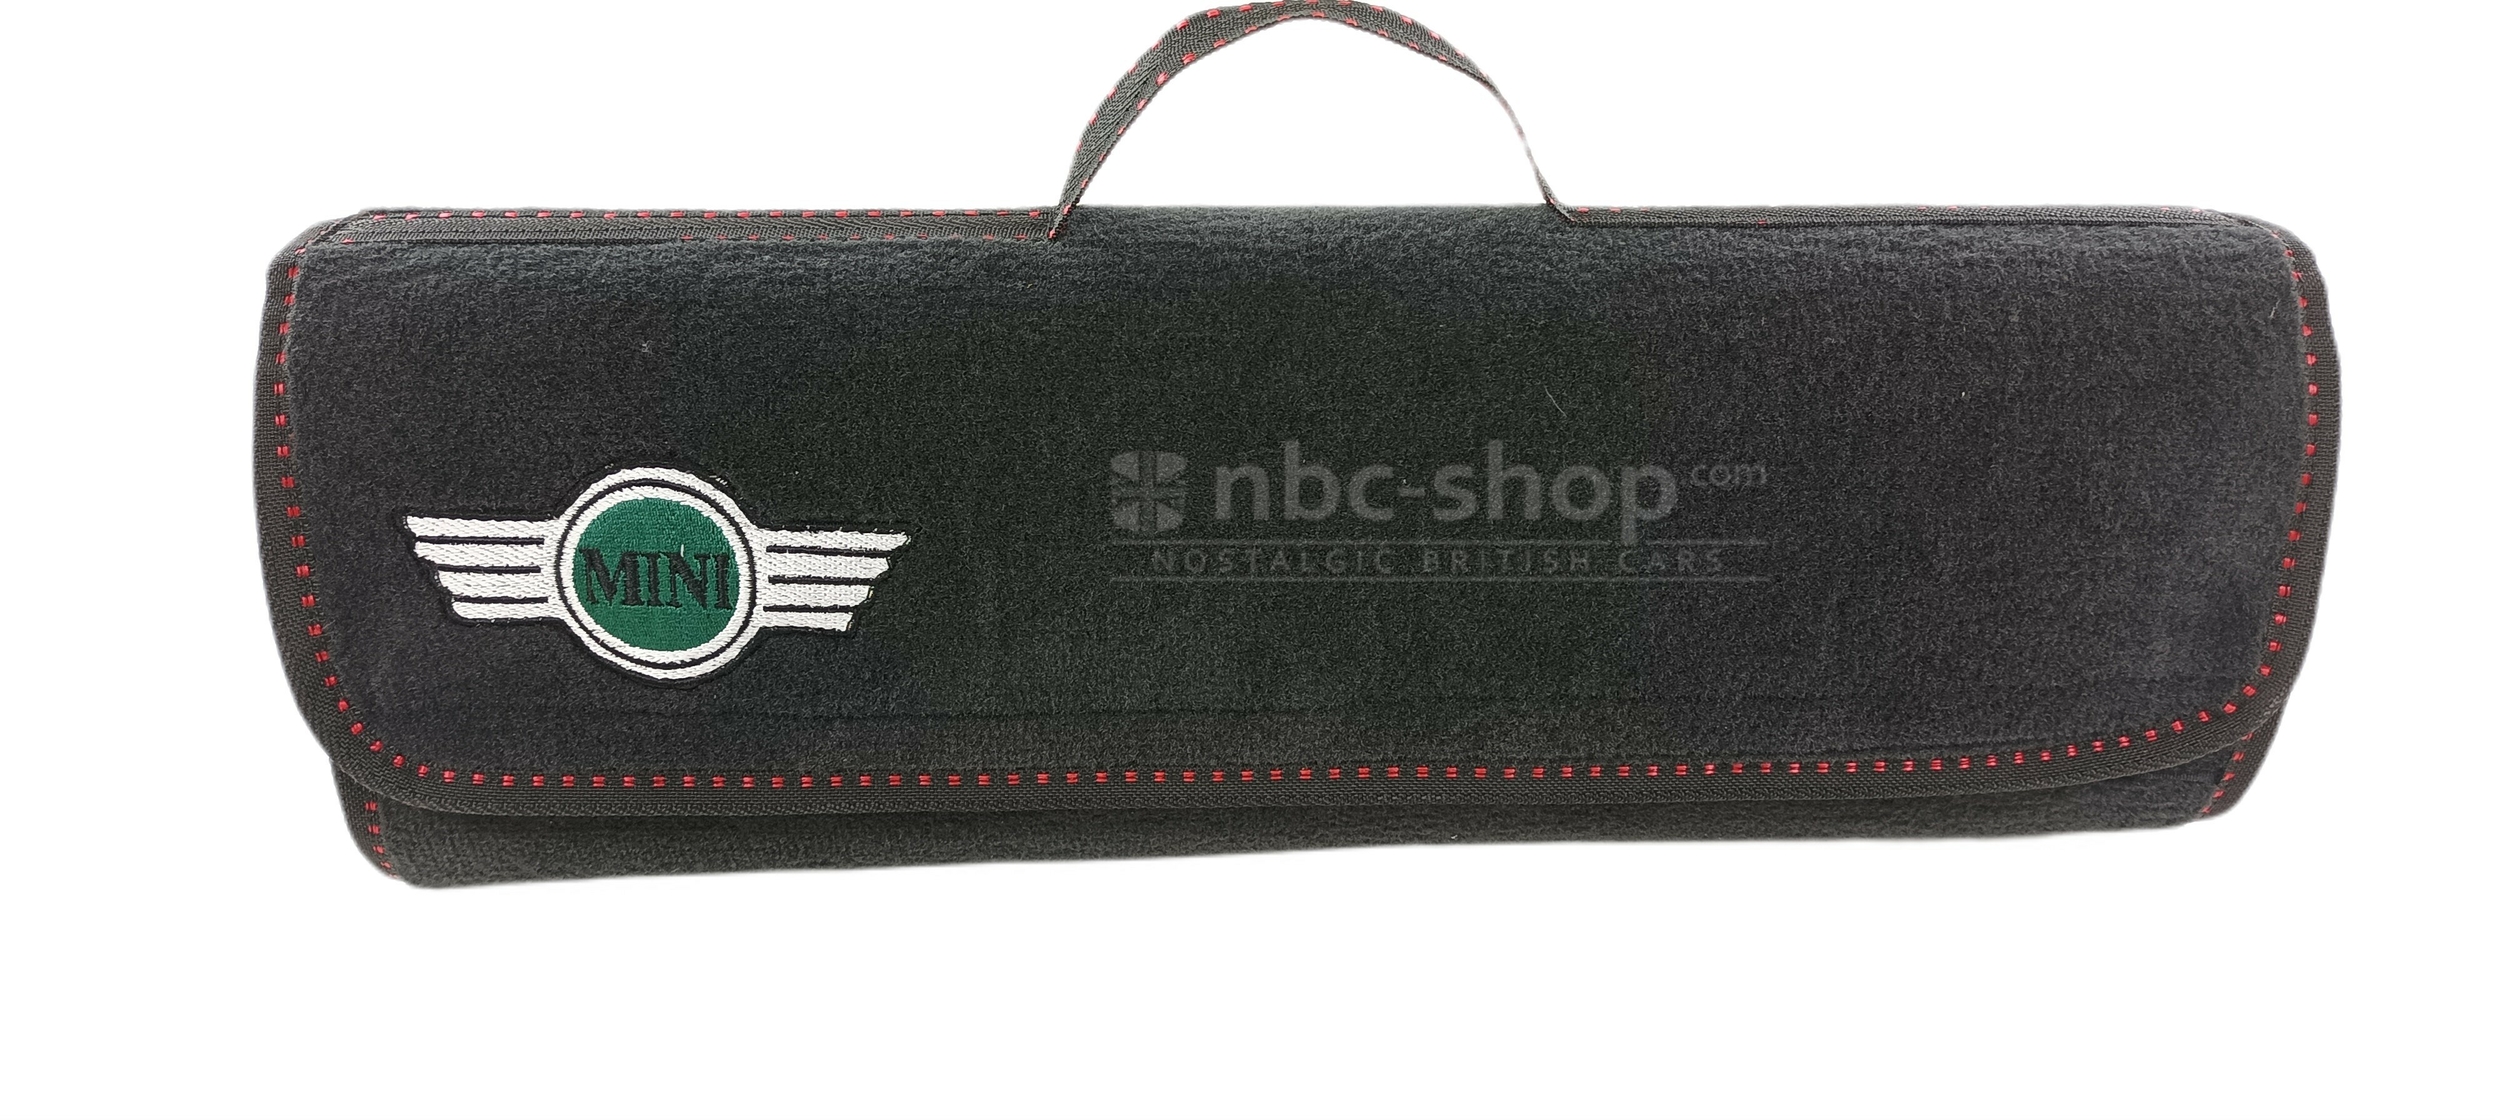 sac de coffre logo mini aile nbc-shop